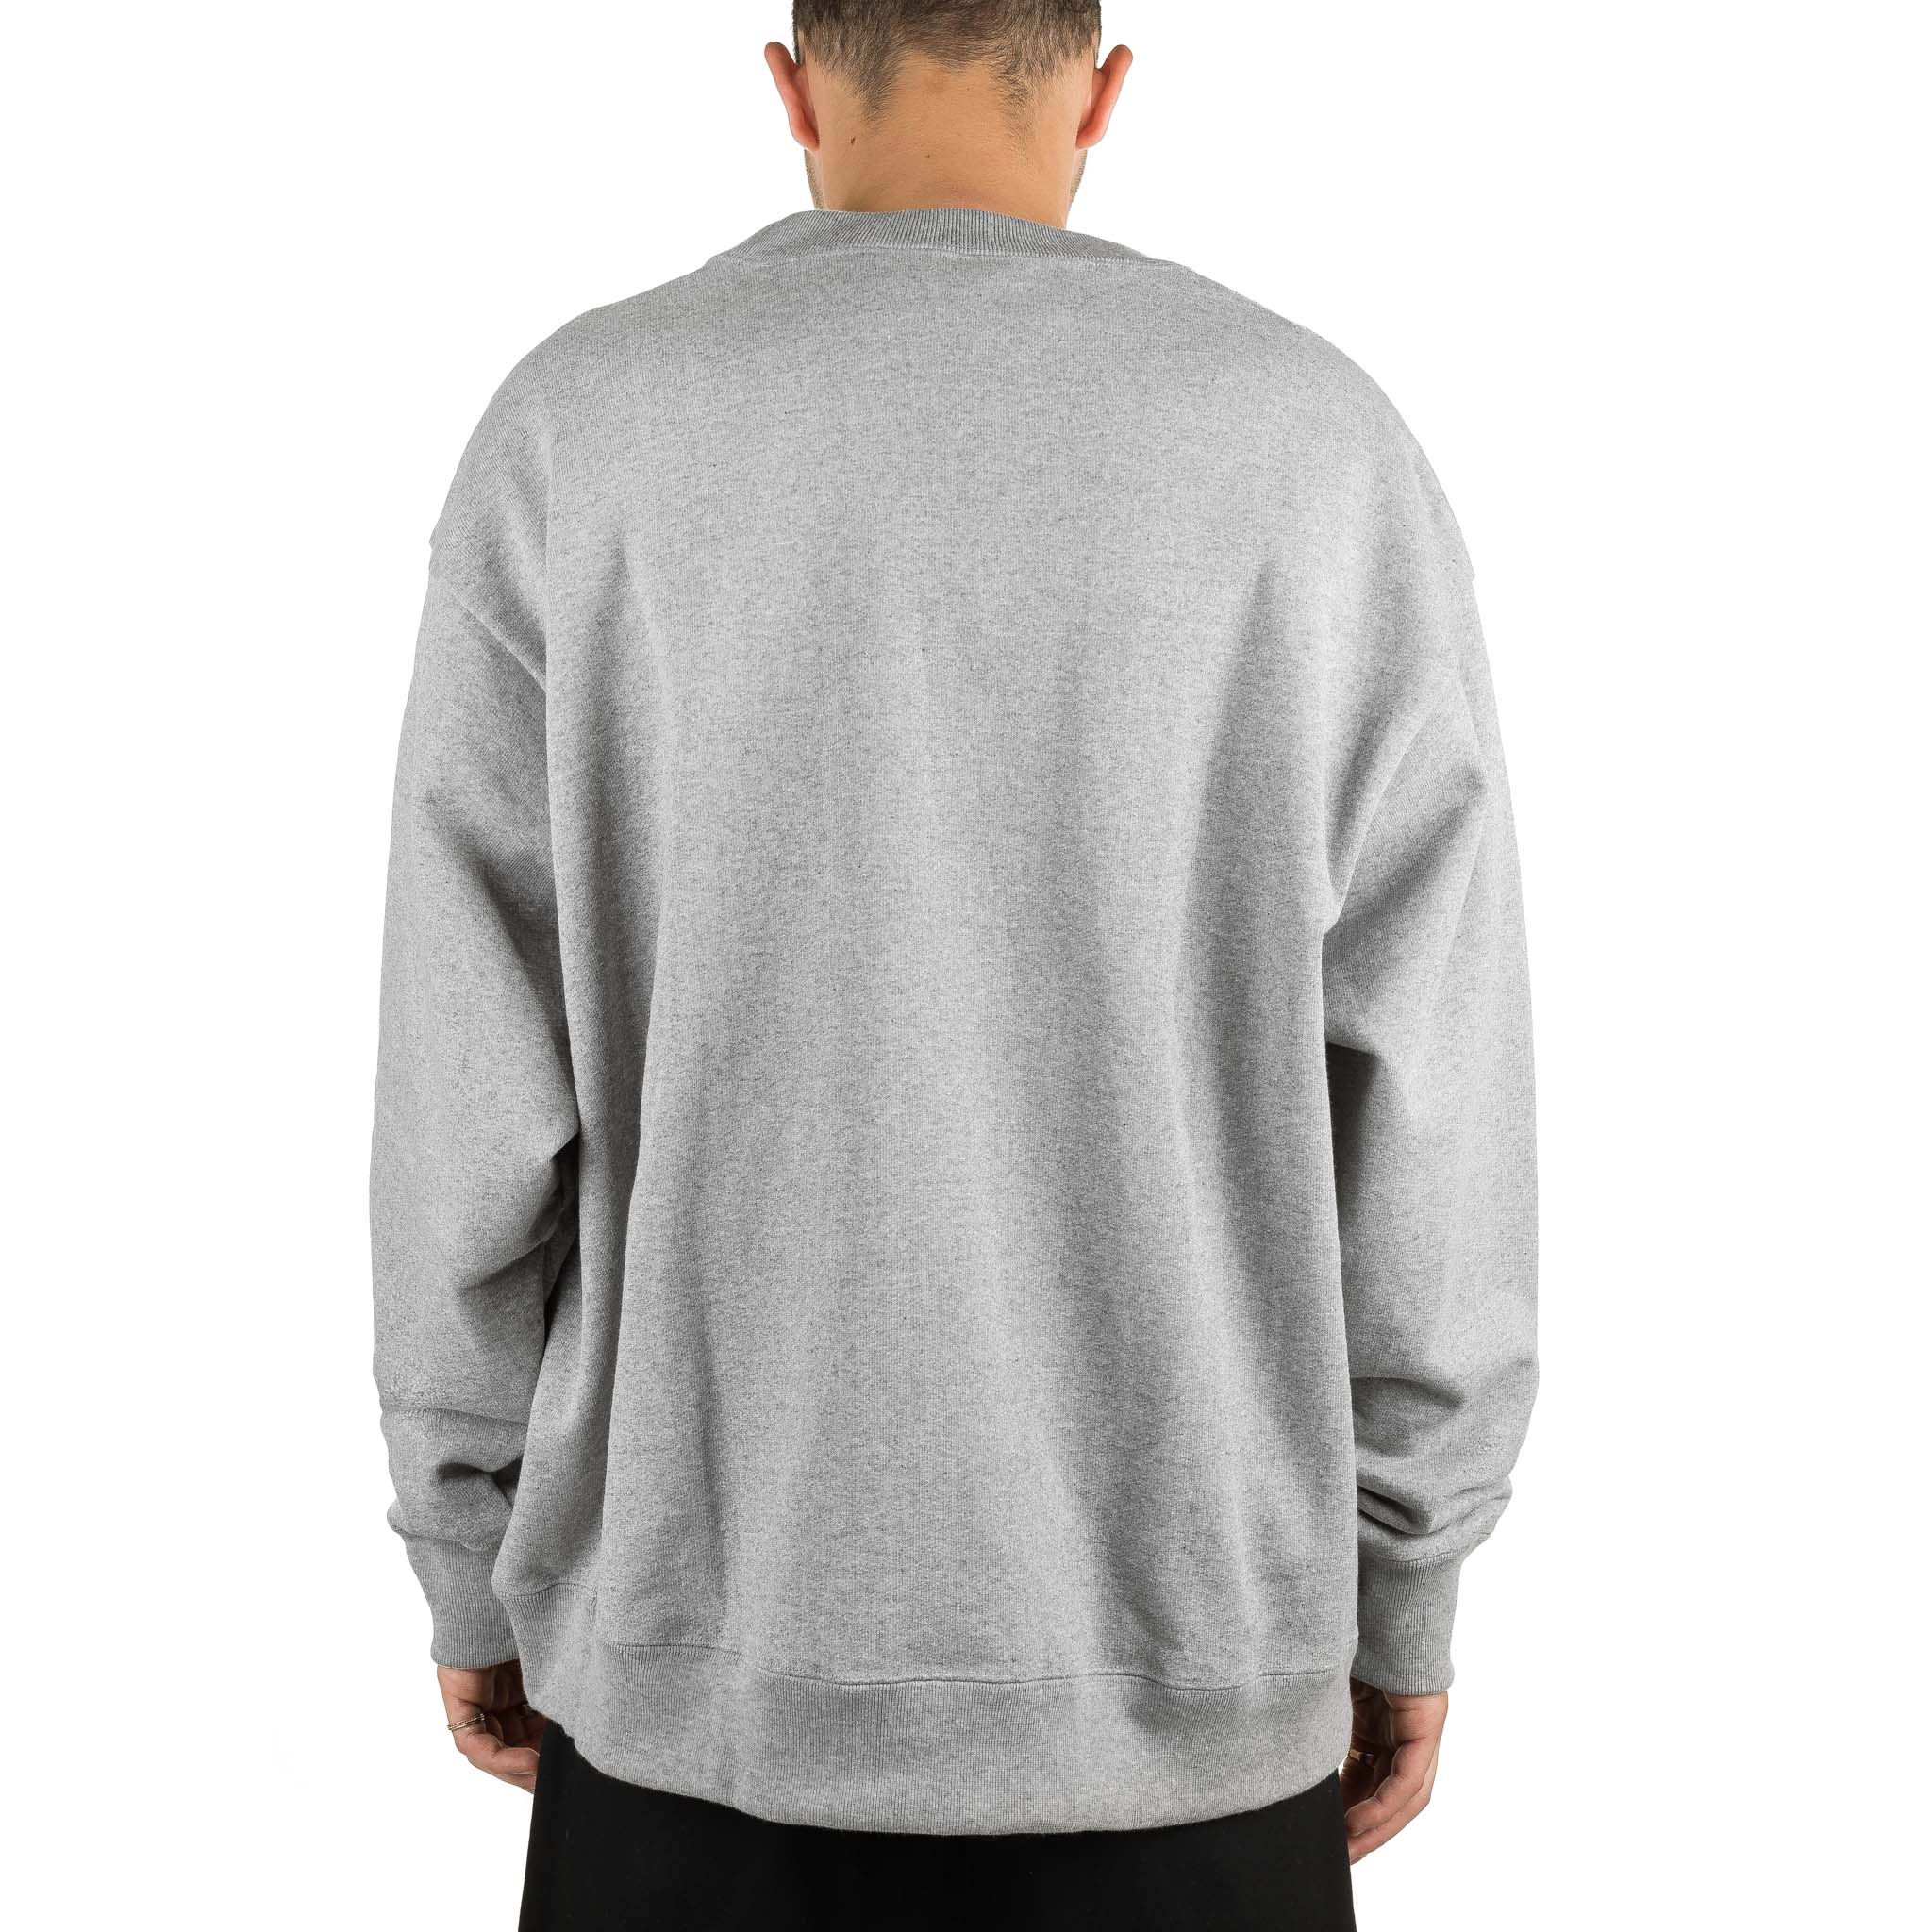 Digawel Sweatshirt Rubber Print DWSOB133 Gray